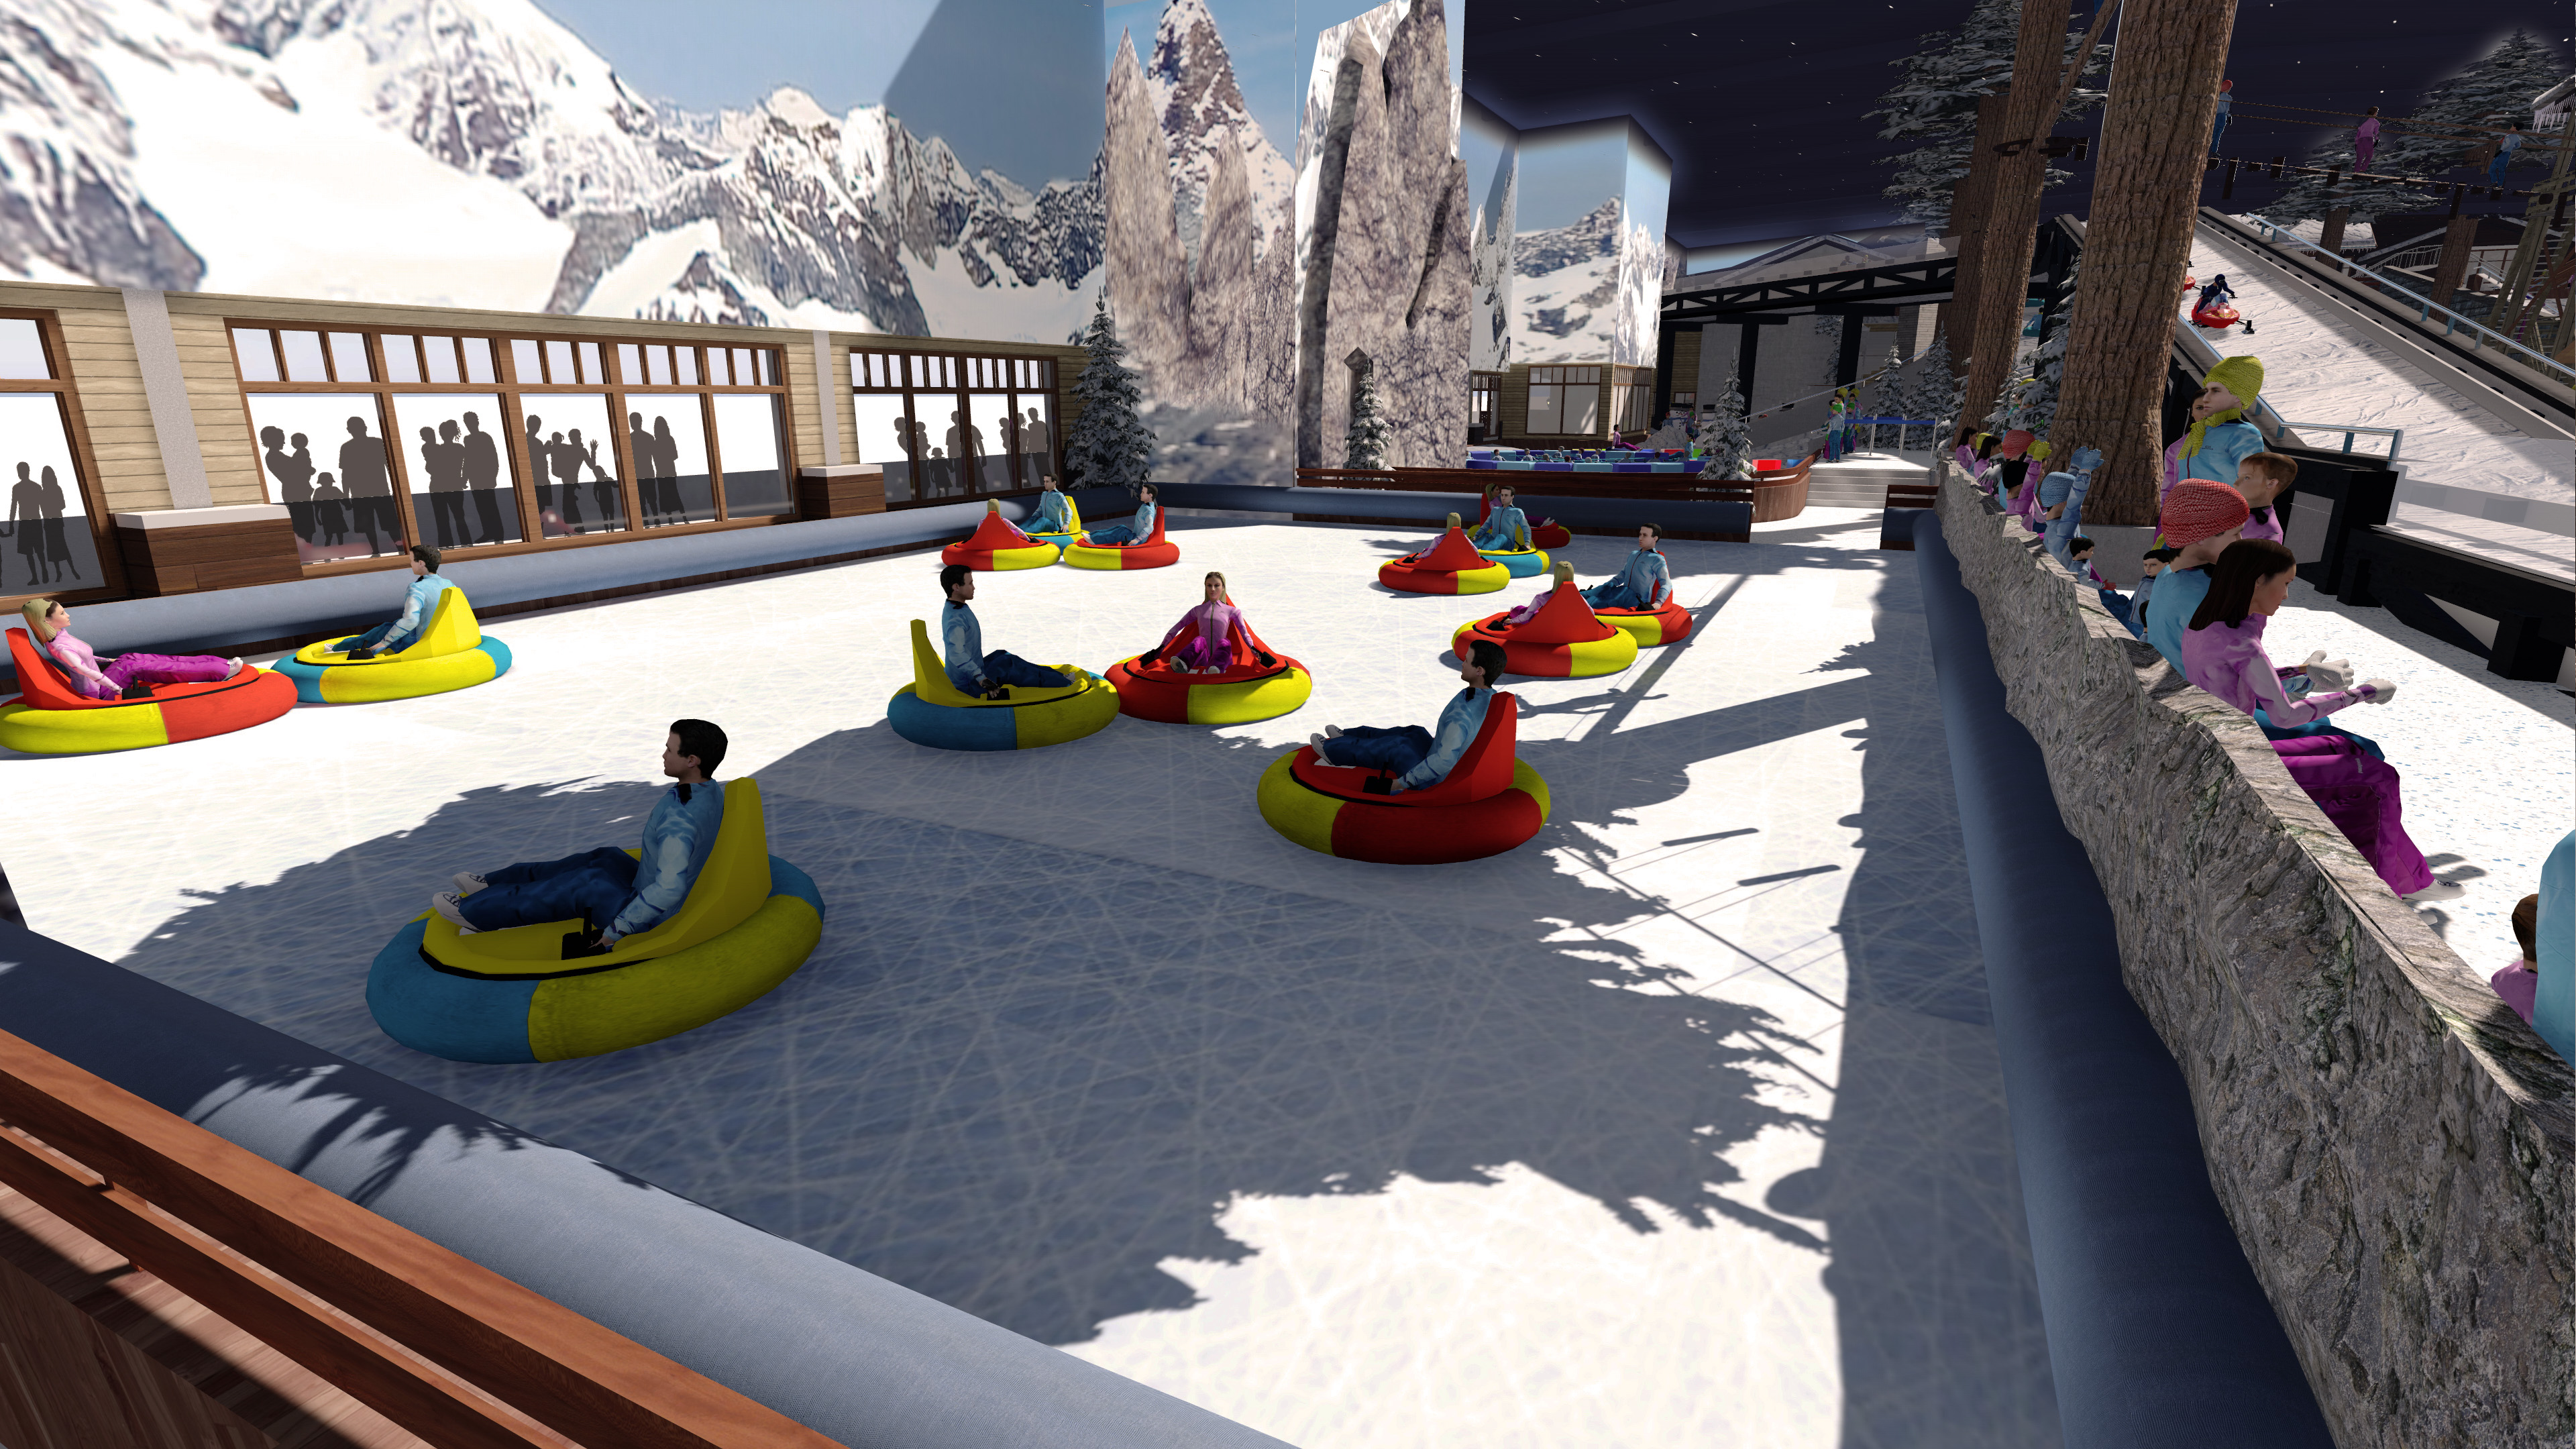 Indoor snow themepark - Snowplay Bumper Cars on Ice